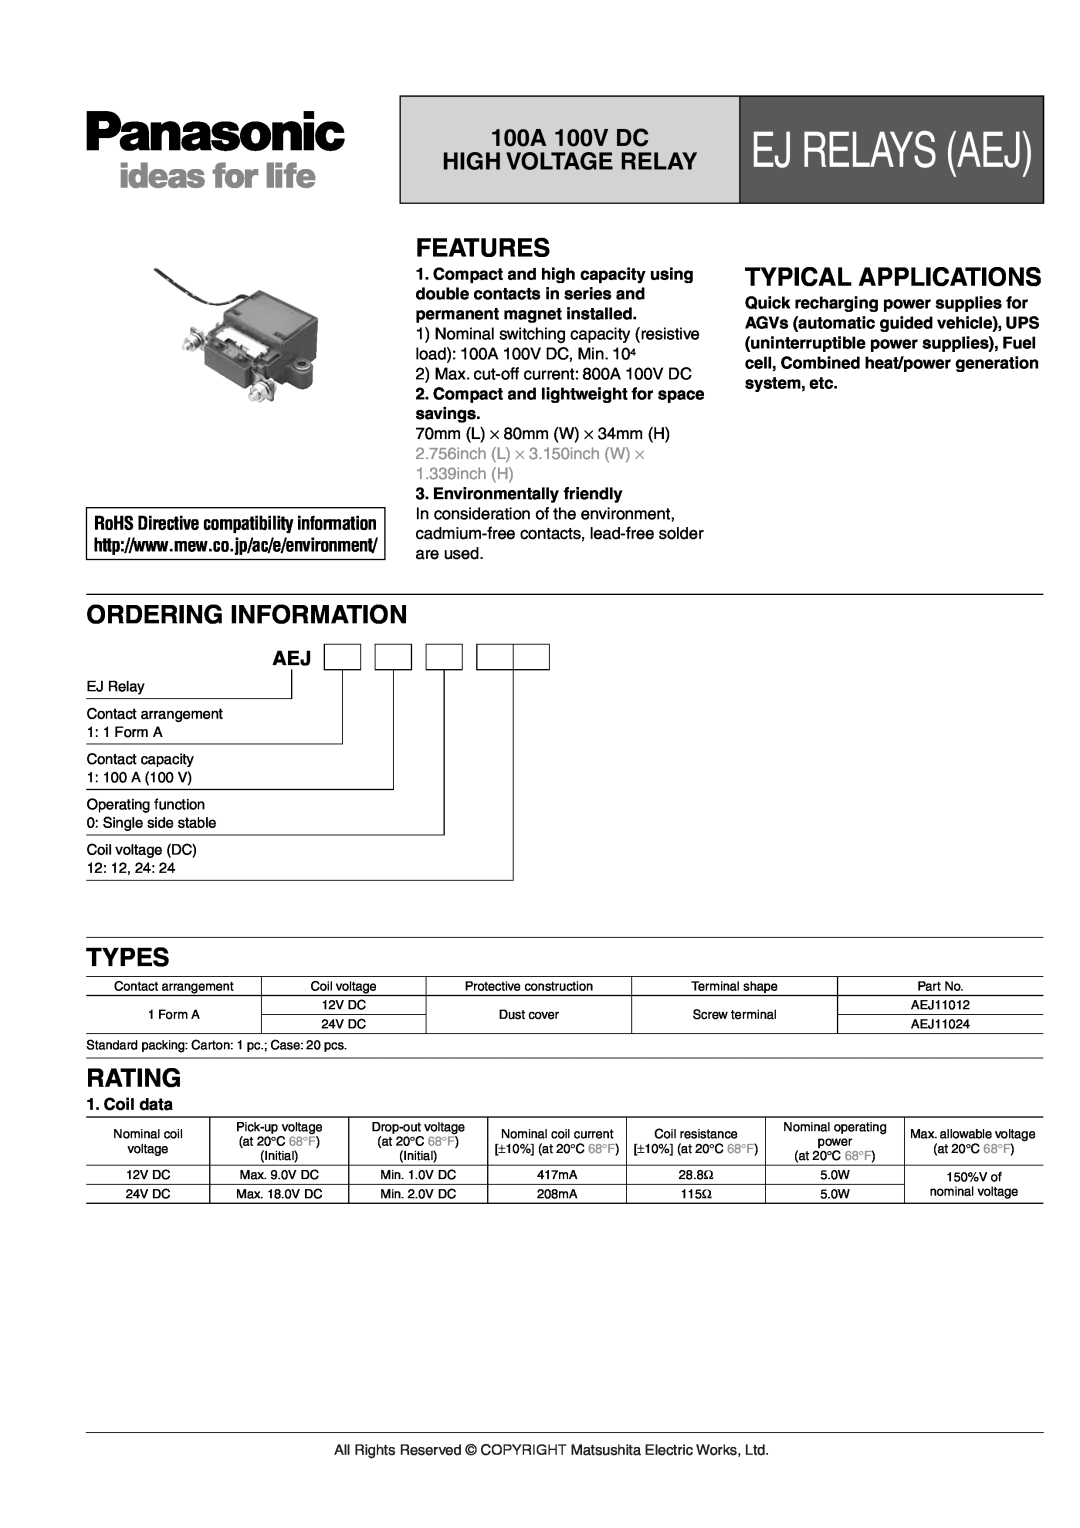 Panasonic EJ Relays manual Features, Typical Applications, Ordering Information, Types, Rating, Ej Relays Aej, Ej Aej 